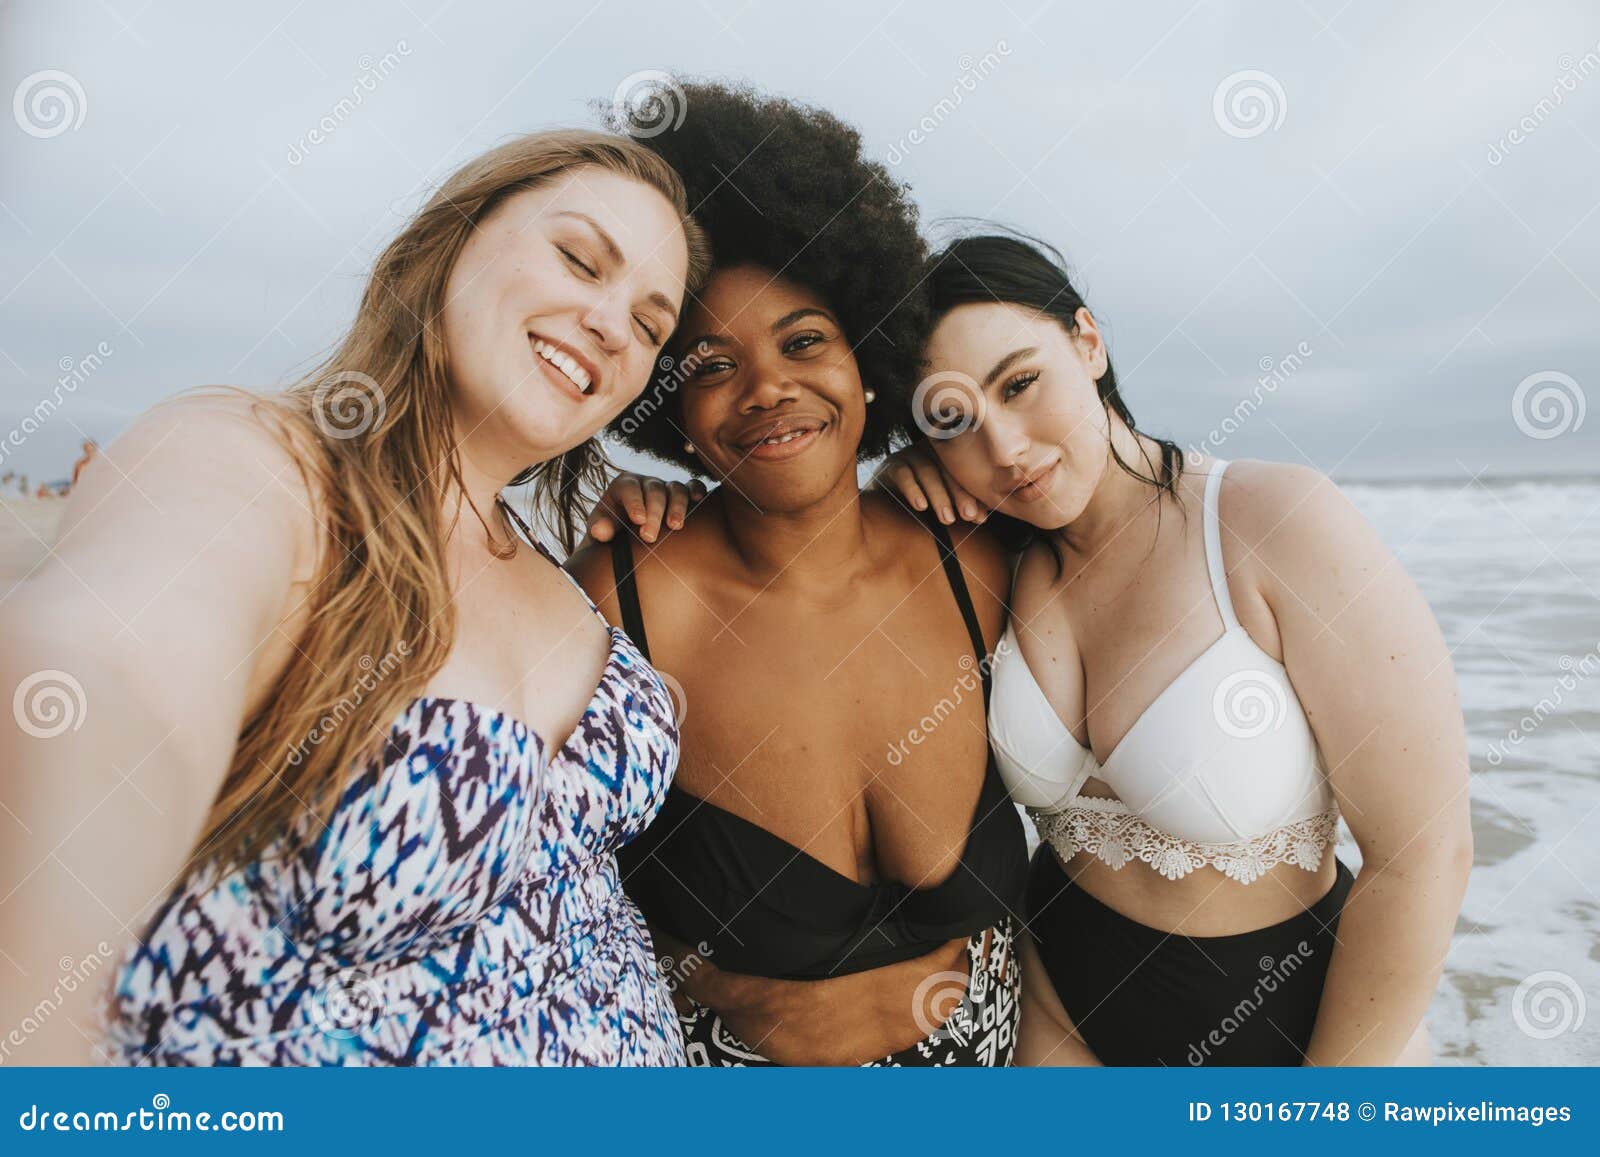 beautiful curvy women taking a selfie at the beach